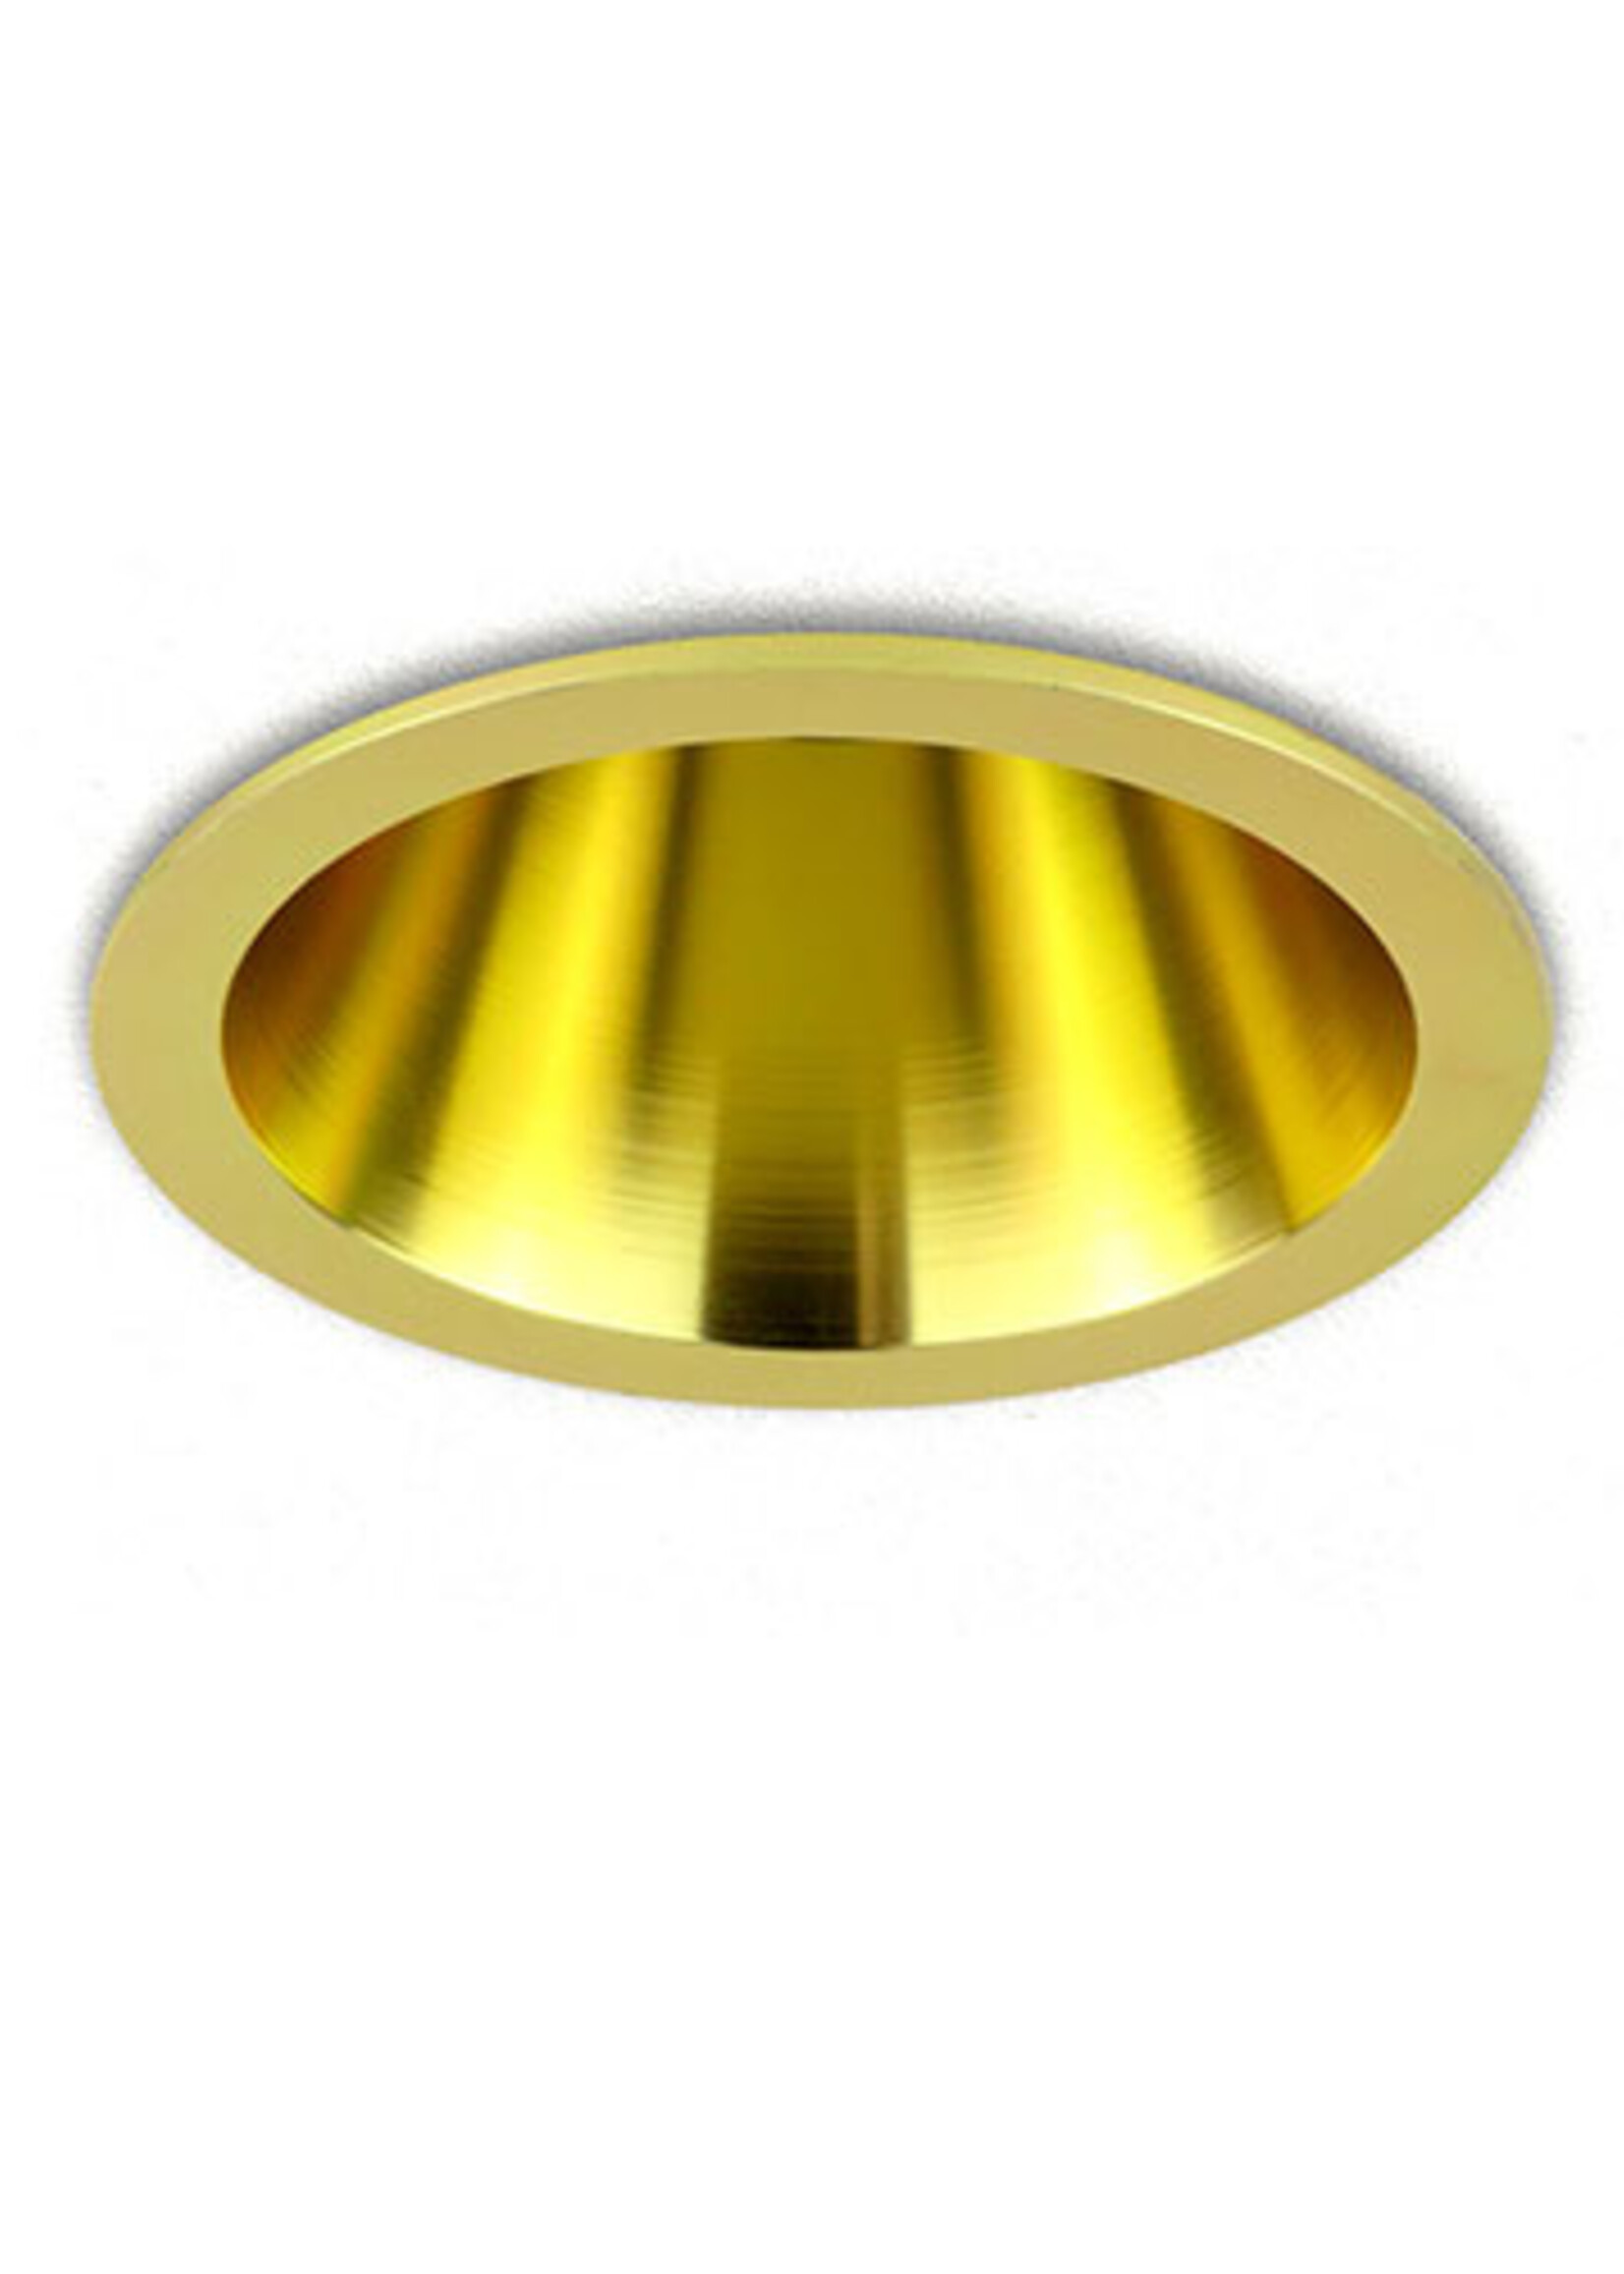 SOLISTECH Golden LED Downlight 5W 3000K warm white ⌀80mm Anti glare